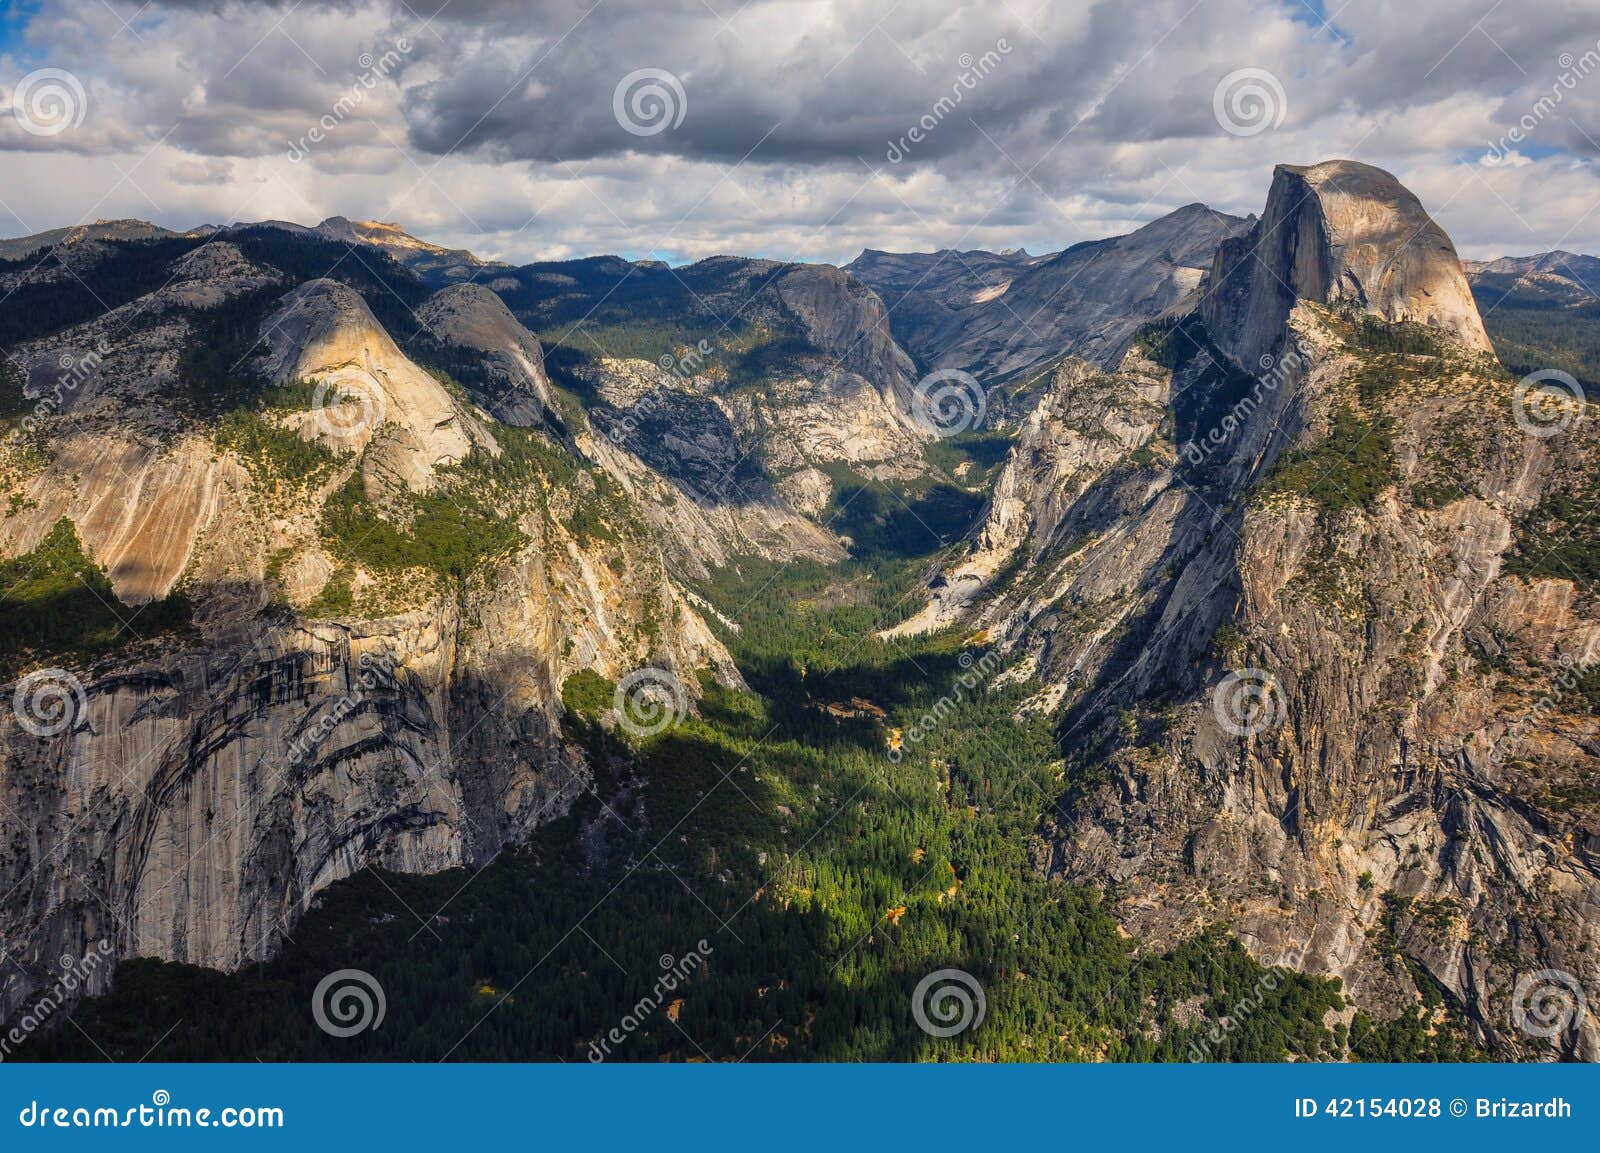 gorgeous yosemite national park, california, usa